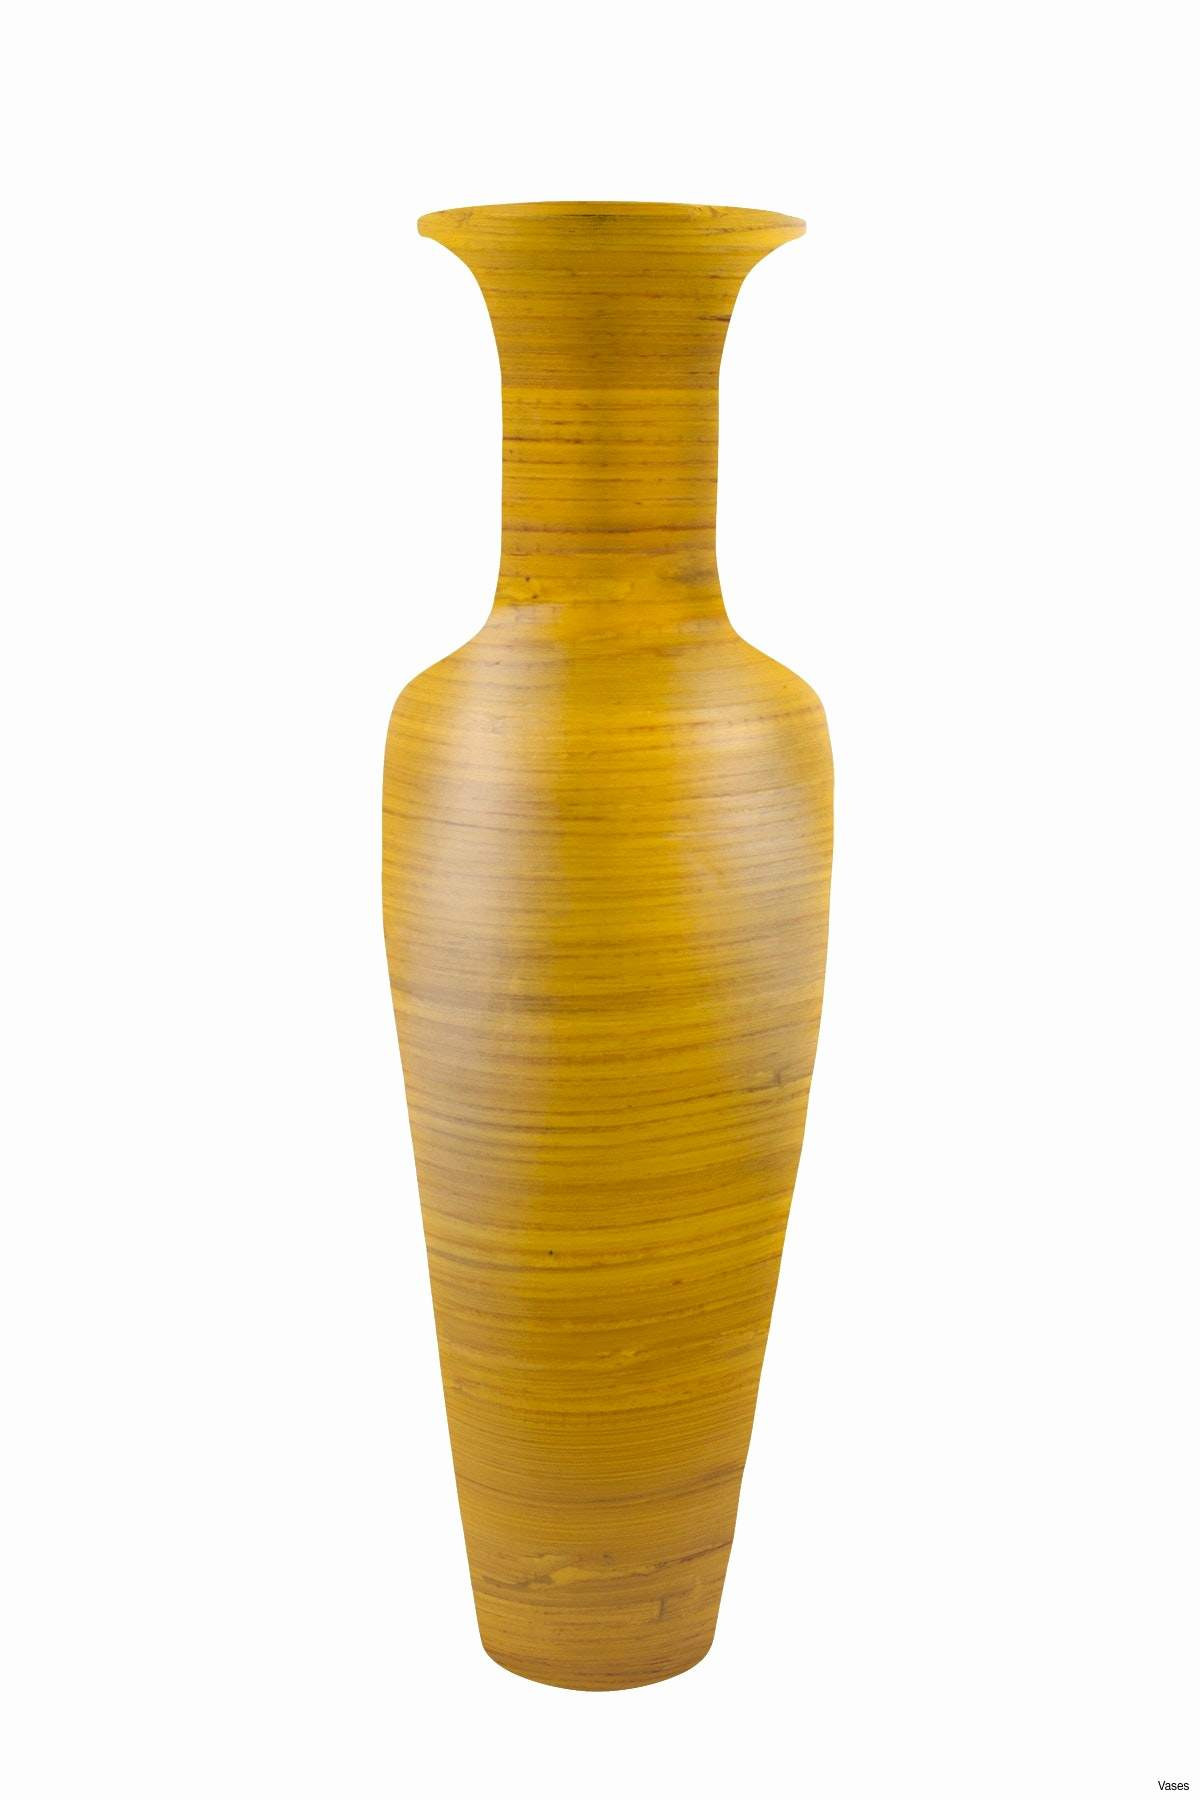 20 Recommended oriental Porcelain Vase 2023 free download oriental porcelain vase of set of 3 vases pics 31 fresh modern flower vase vases artificial in set of 3 vases pics area floor rugs new joaquin gray vases set 3 2h pottery